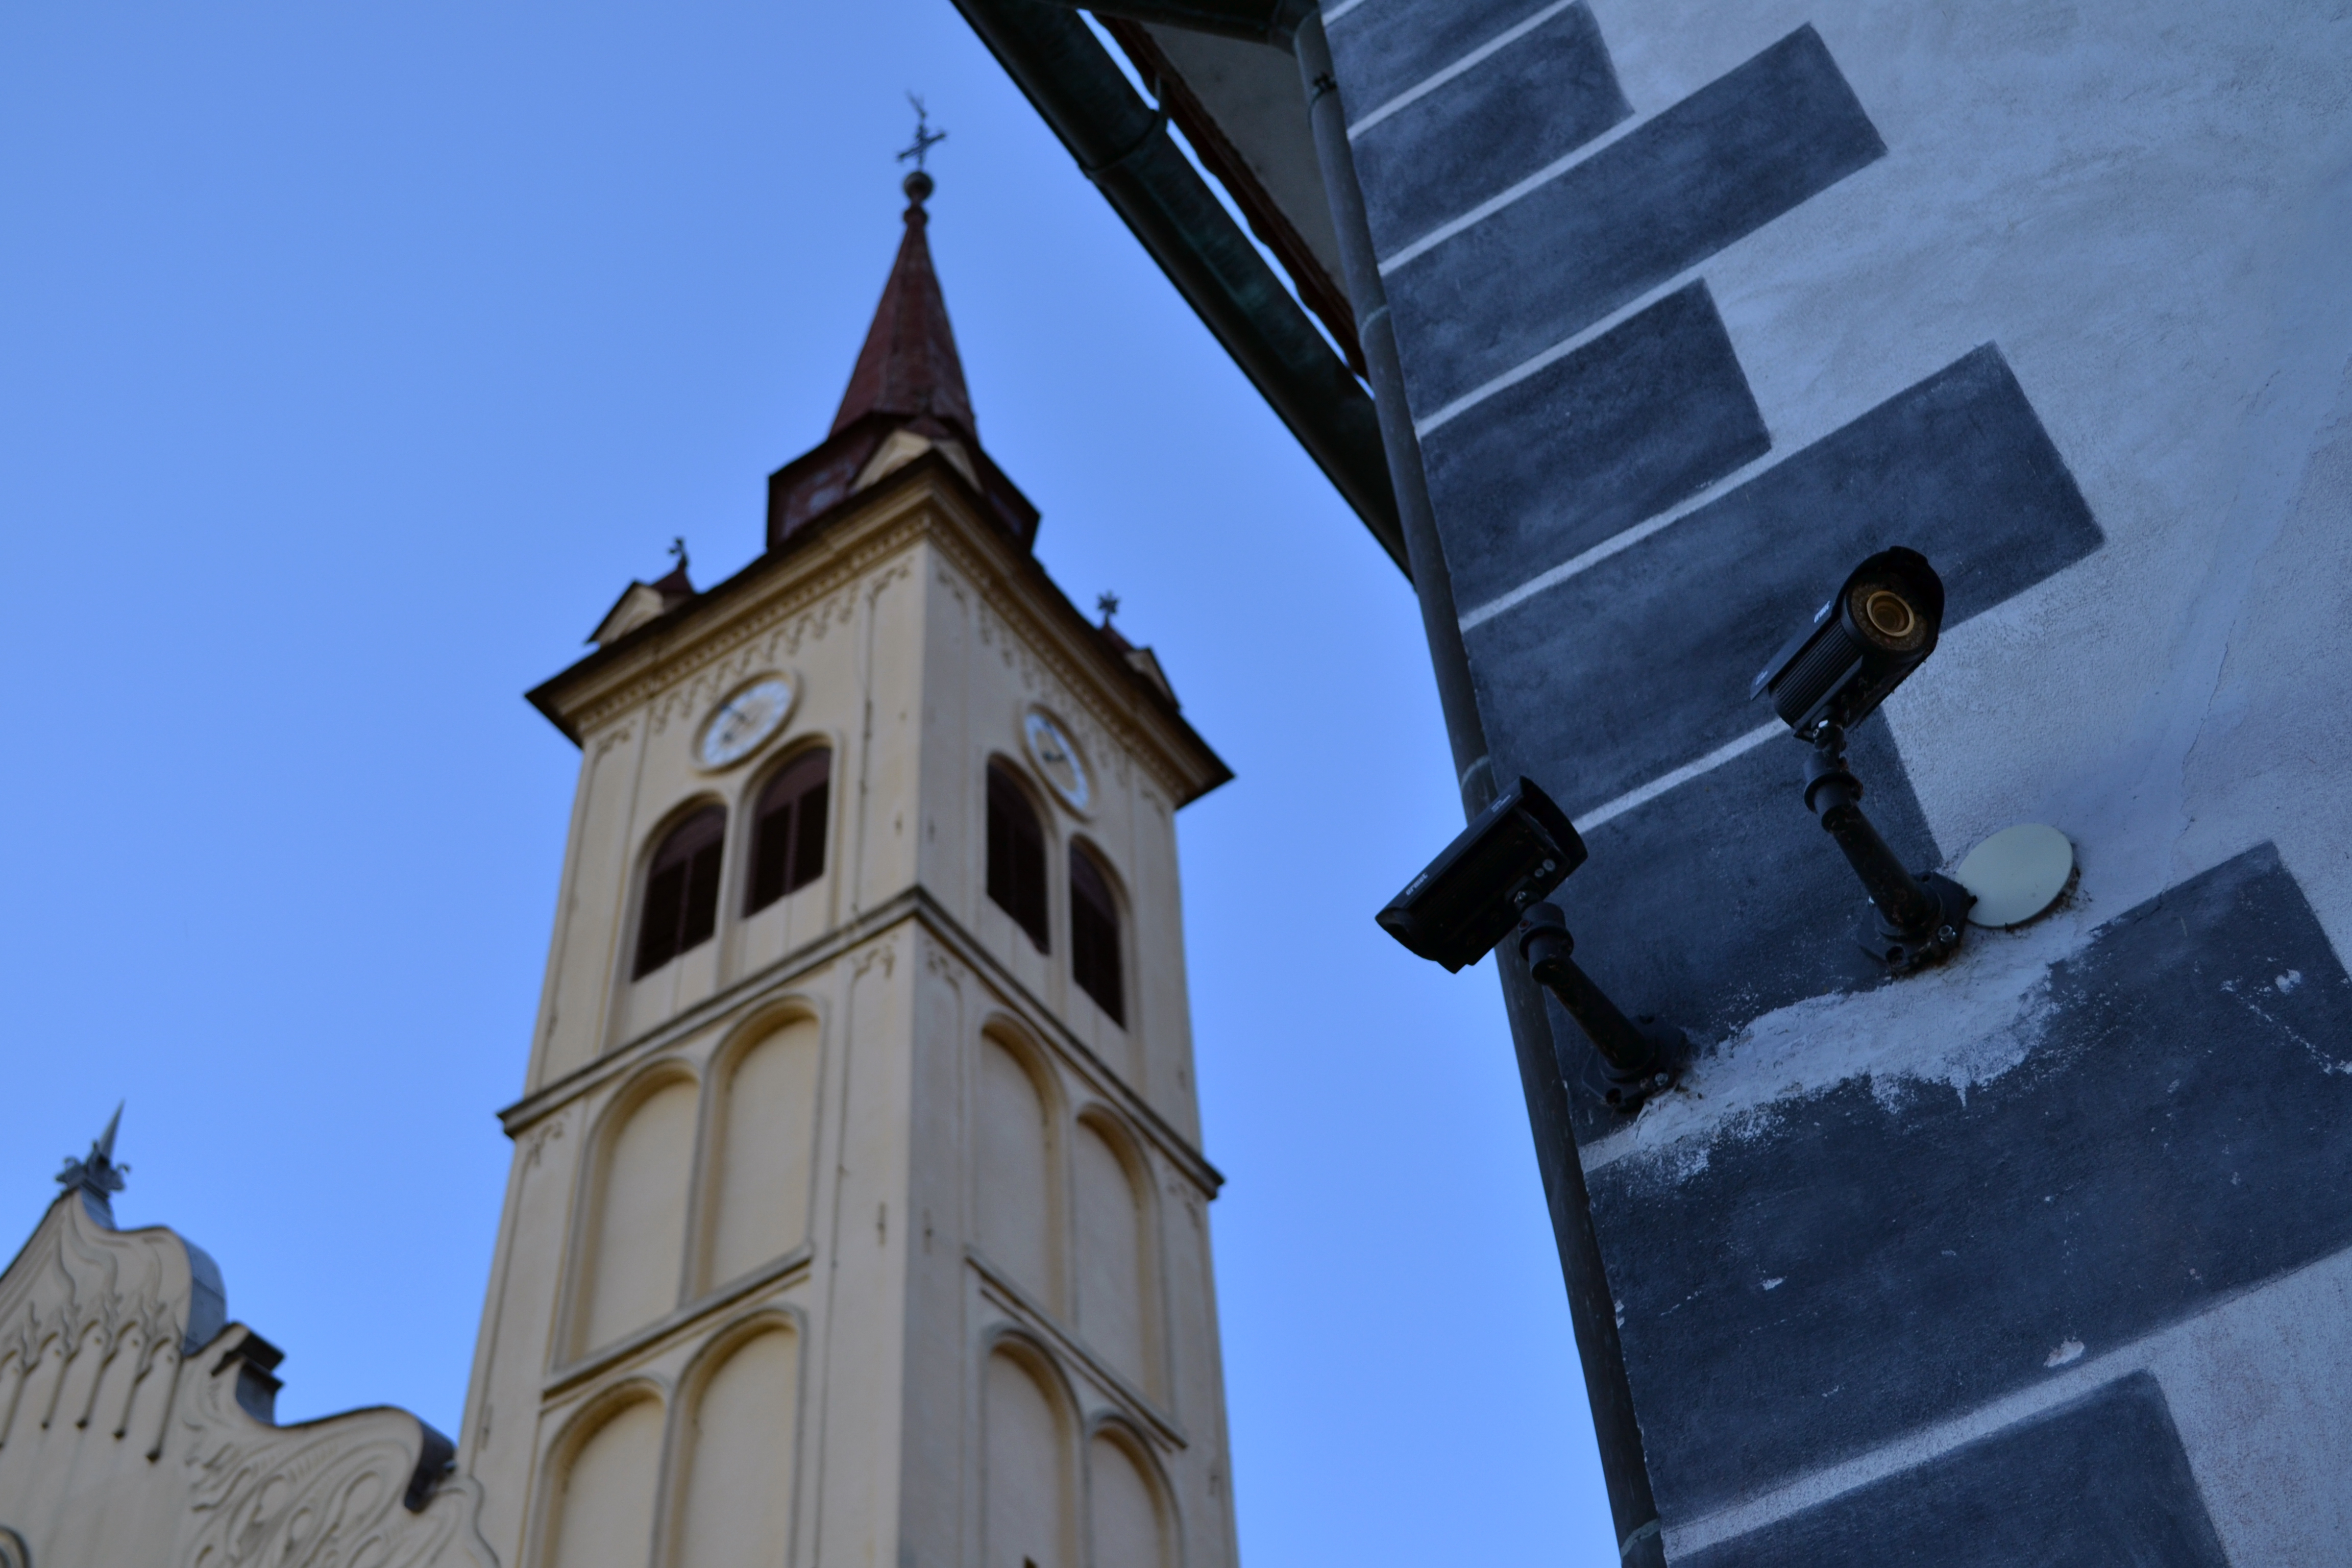 Church with a surveillance camera photo